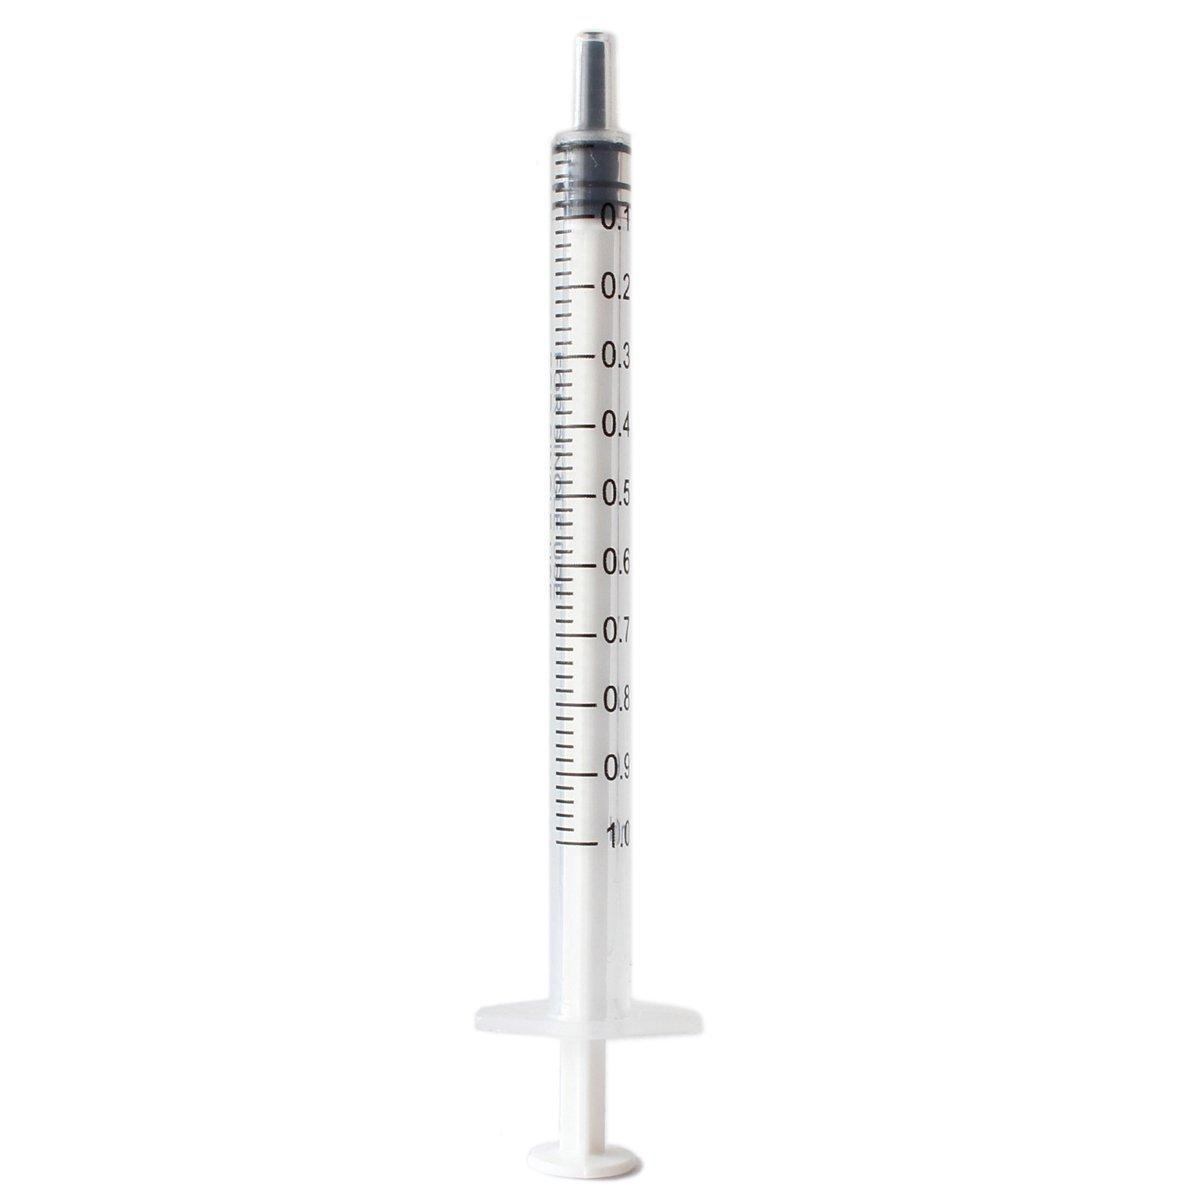 1cc Plastic Syringe Slim Injection Nutrient Syringe with